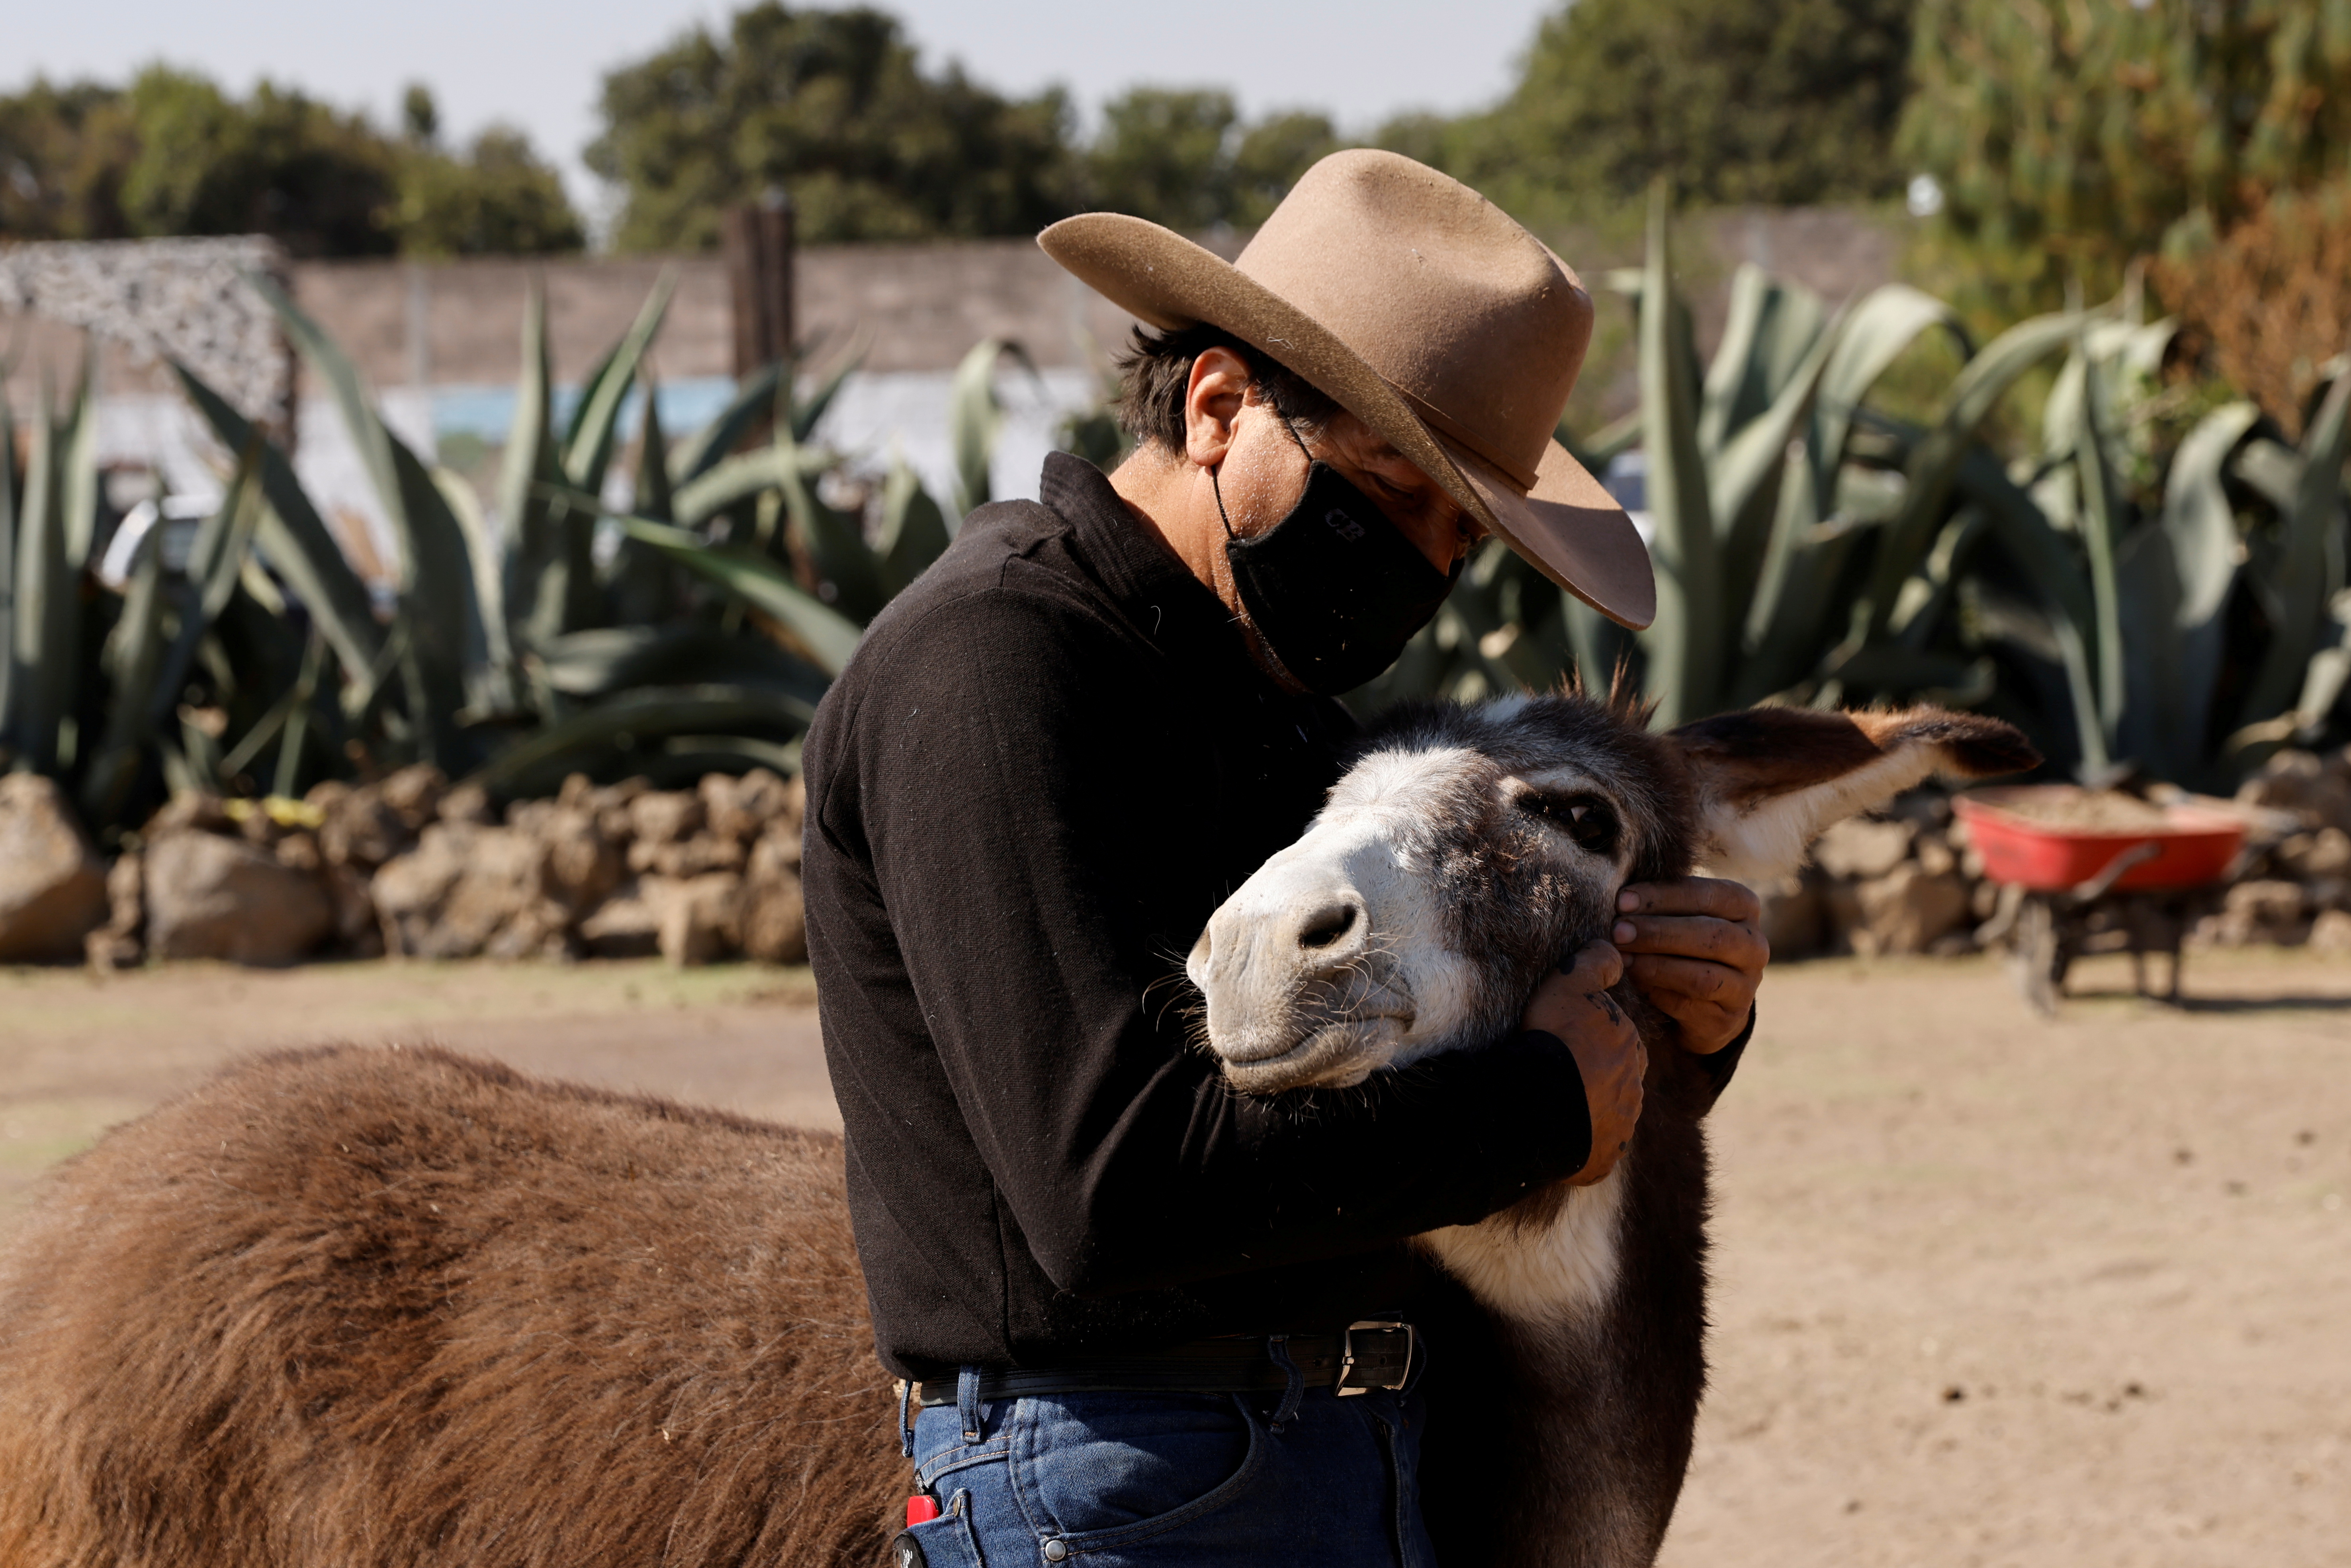 Alcalde panista regala burros a niños para ir a la escuela en Guanajuato  - Página 4 GVNNZVIU3I2E3TBLTNFVDNGXEI